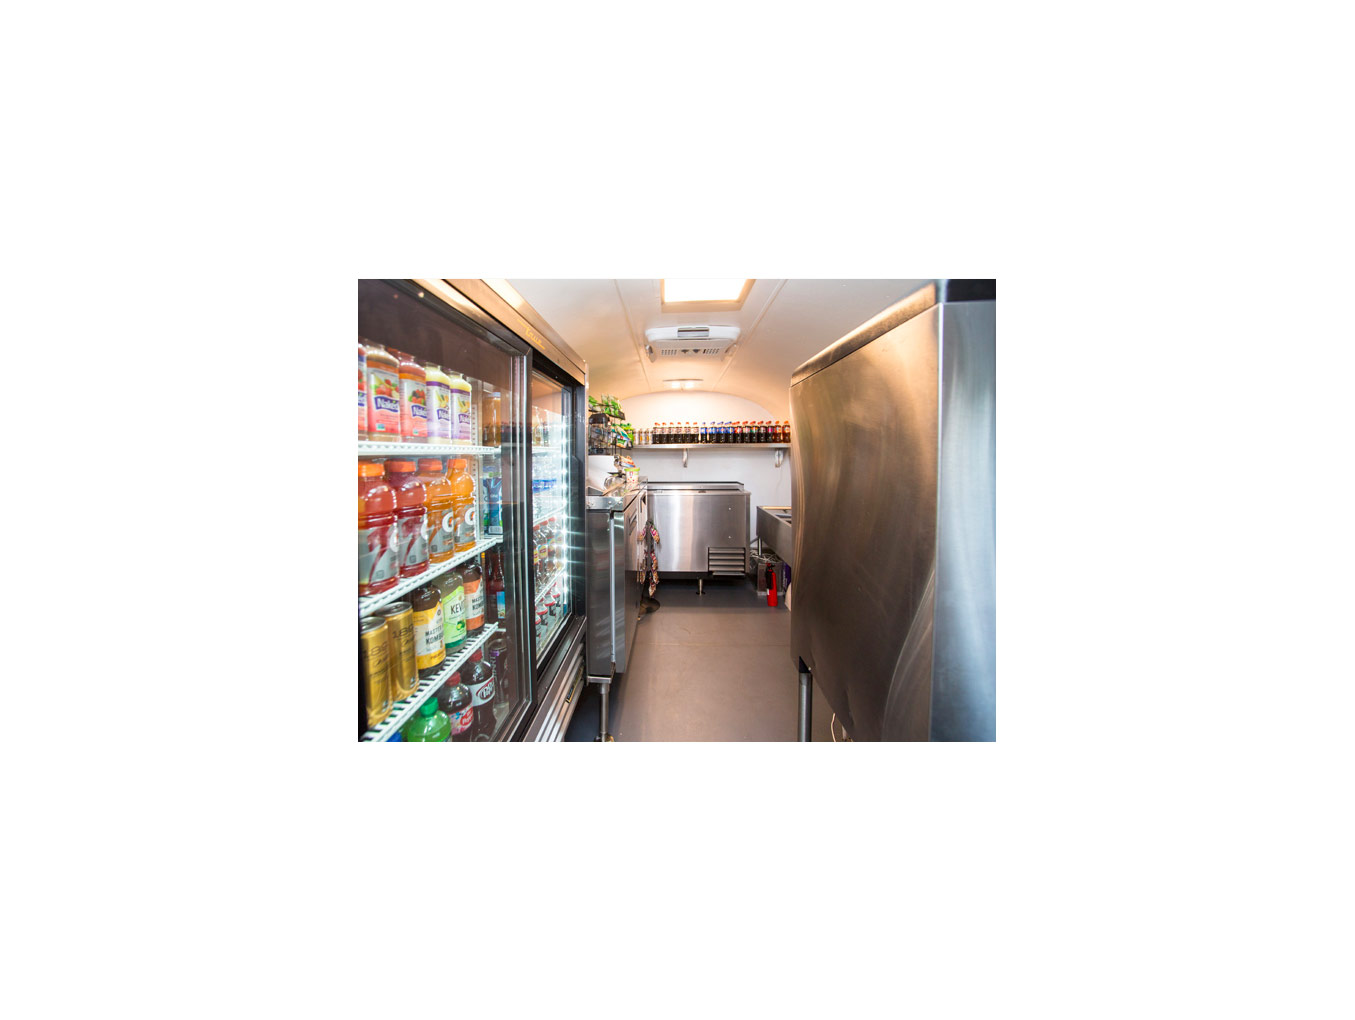 Basecamp Provisions food truck - interior